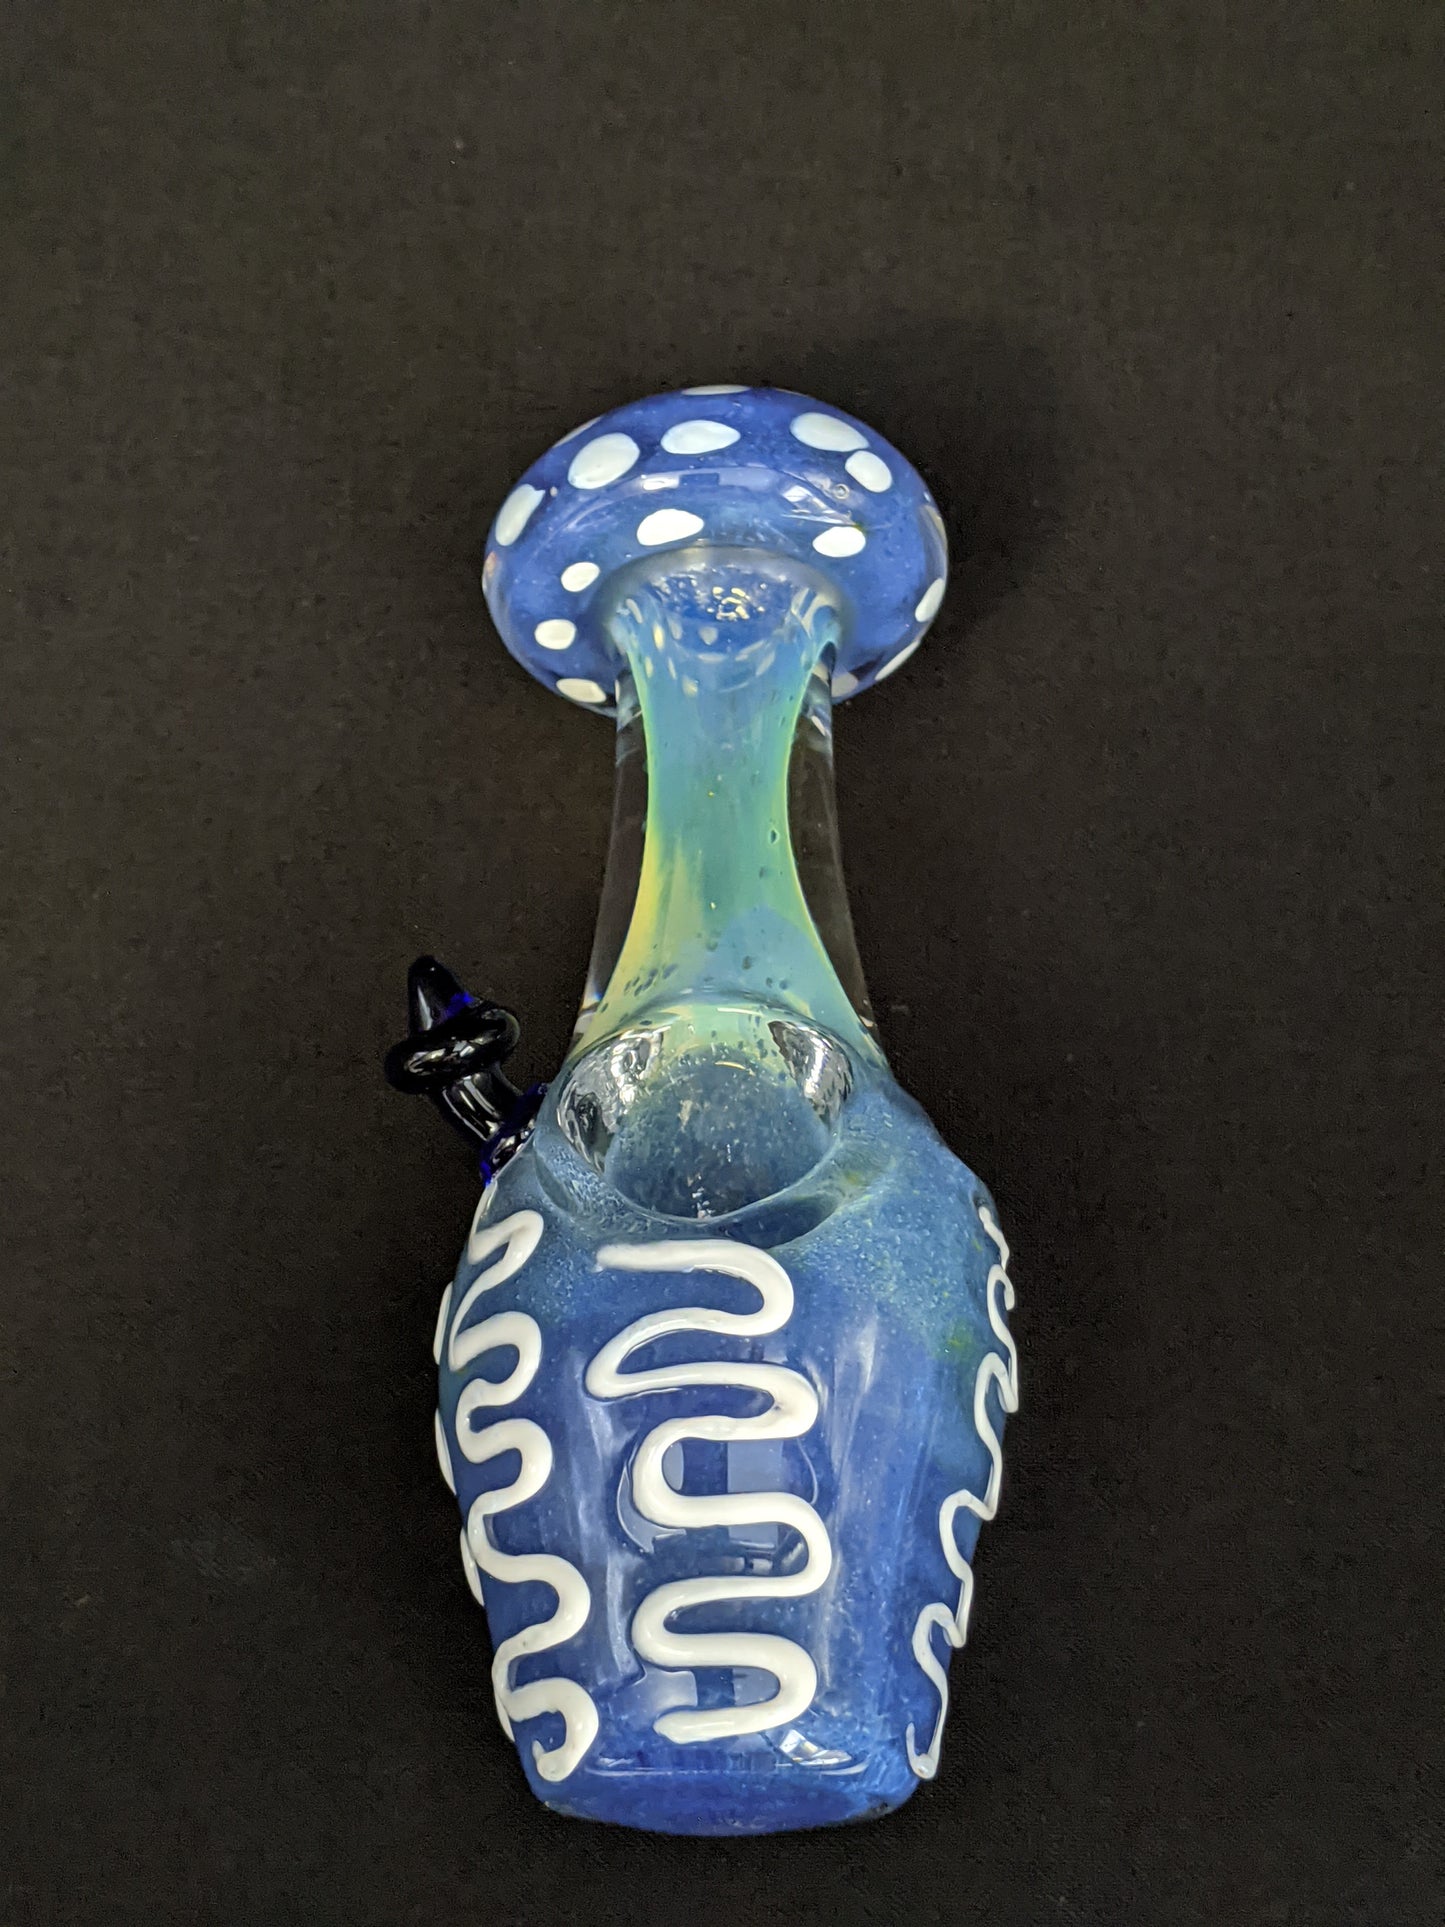 5" Glass Spoon Mushroom Style Blue 02